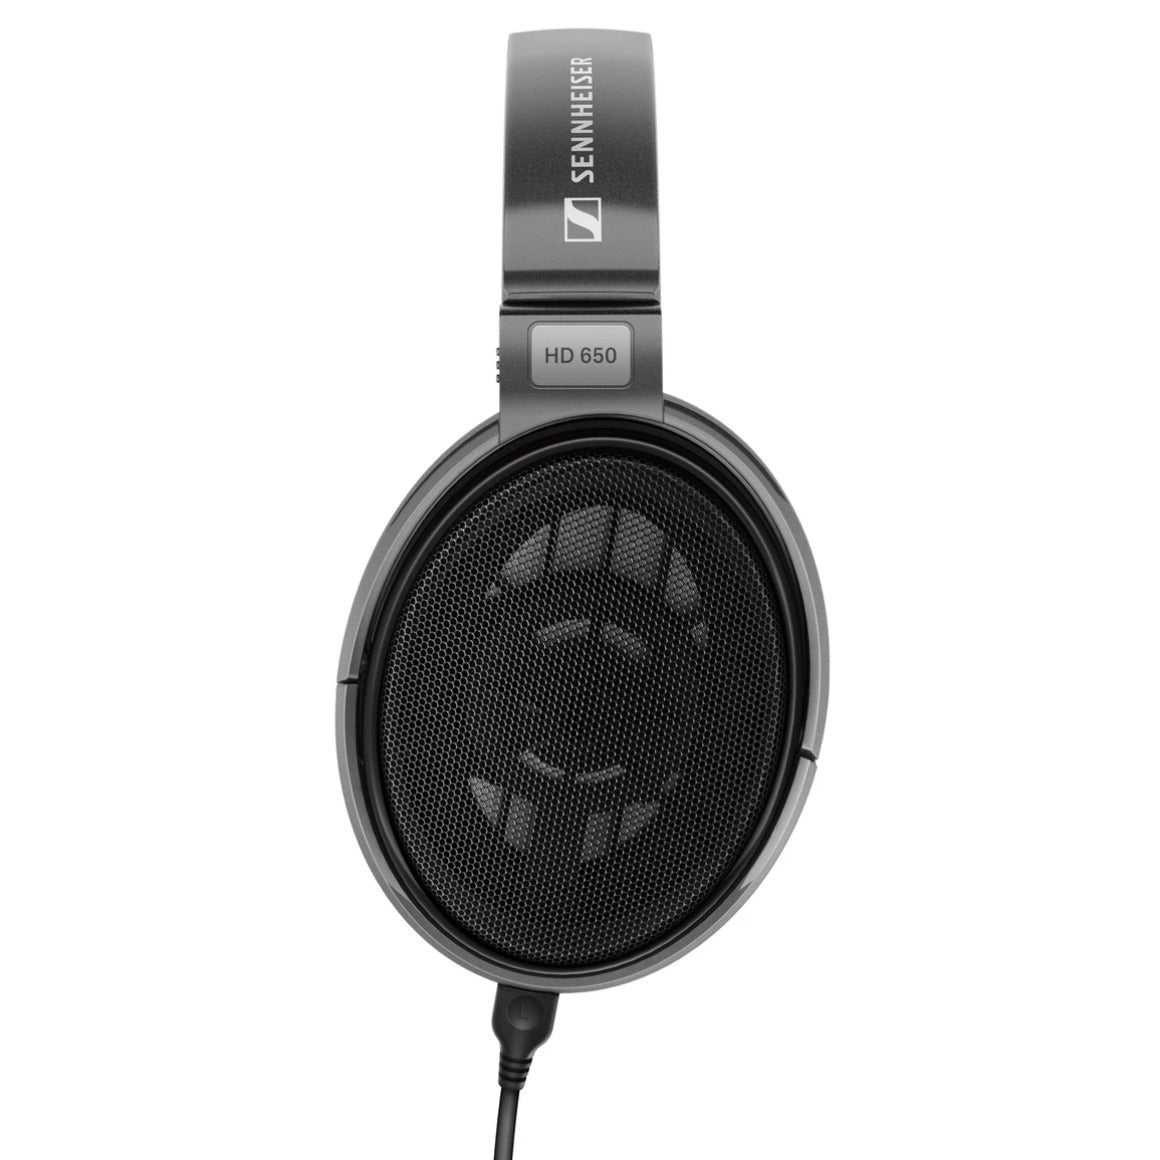 Sennheiser HD 700 Headband Headphones - Titan for sale online